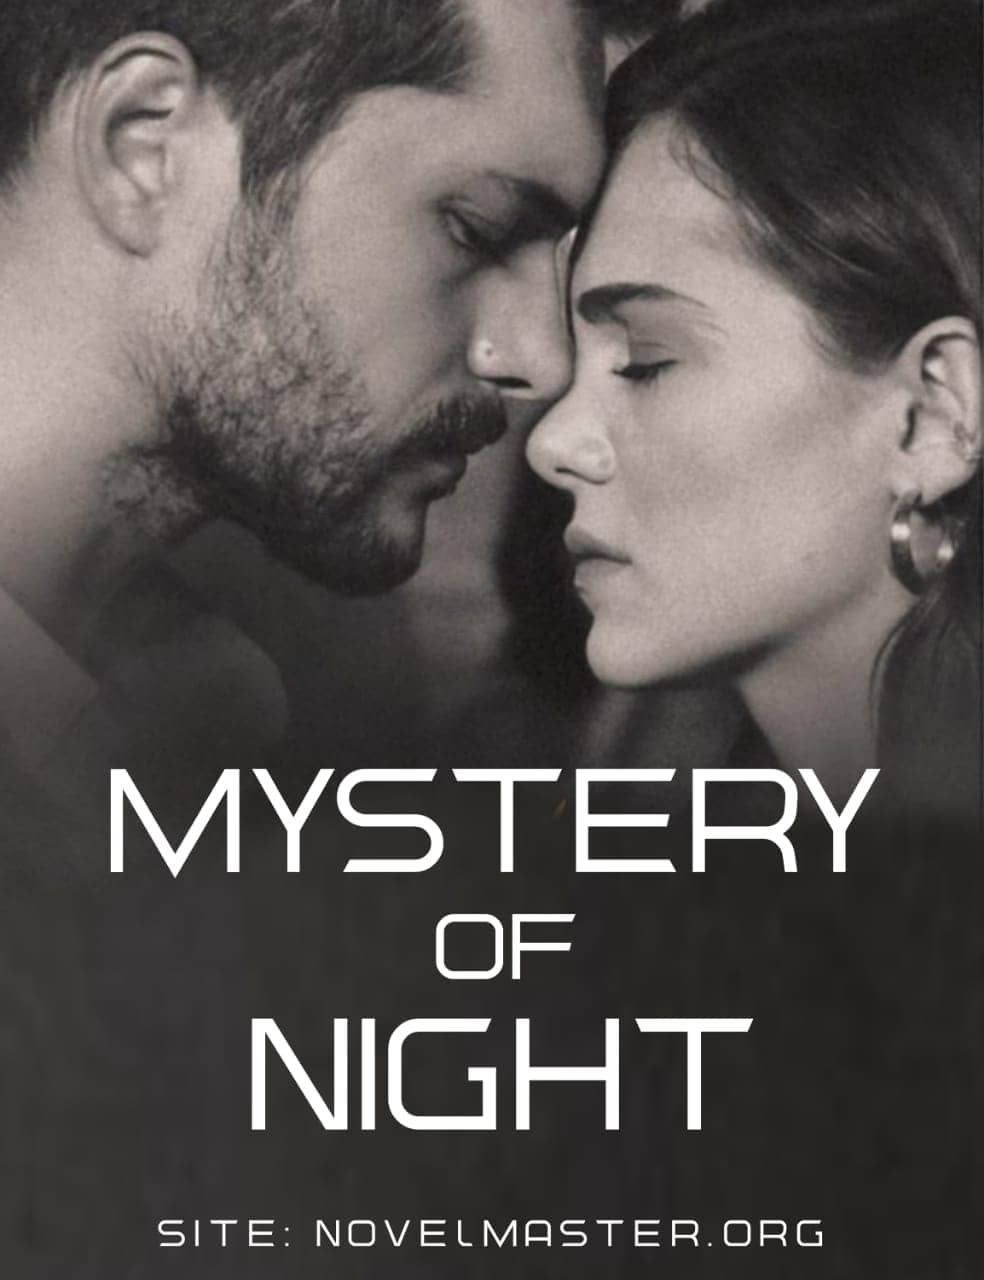 Mystery of night|Ep_03|Fantasy based novel2020